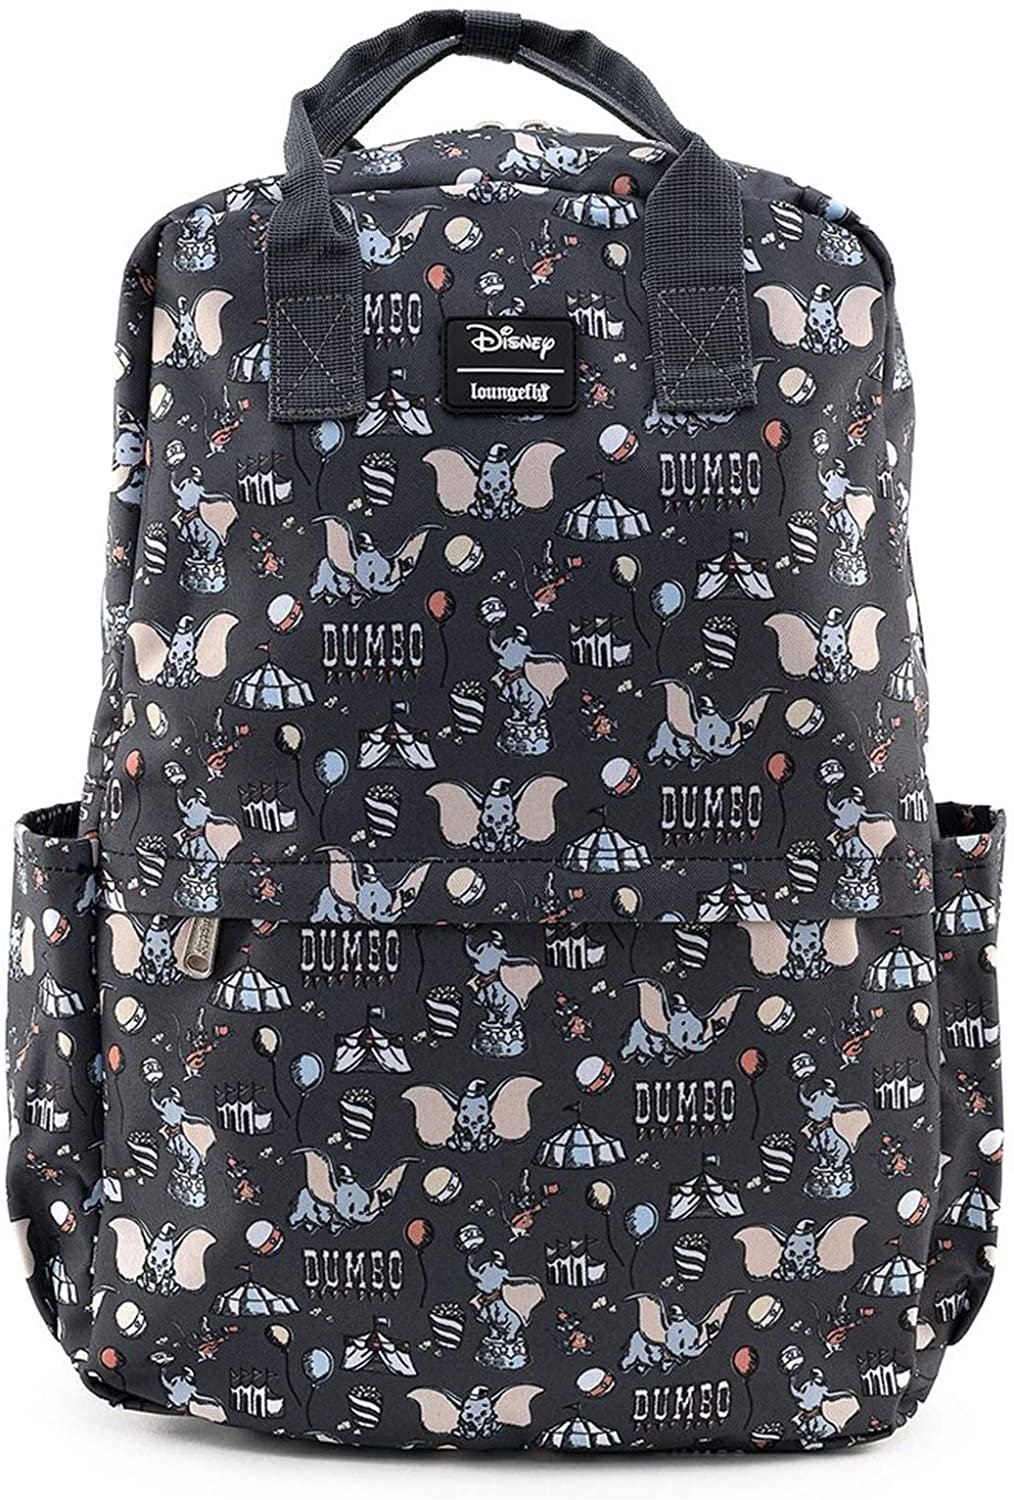 Disney Dumbo Big Top Allover Print Nylon Backpack